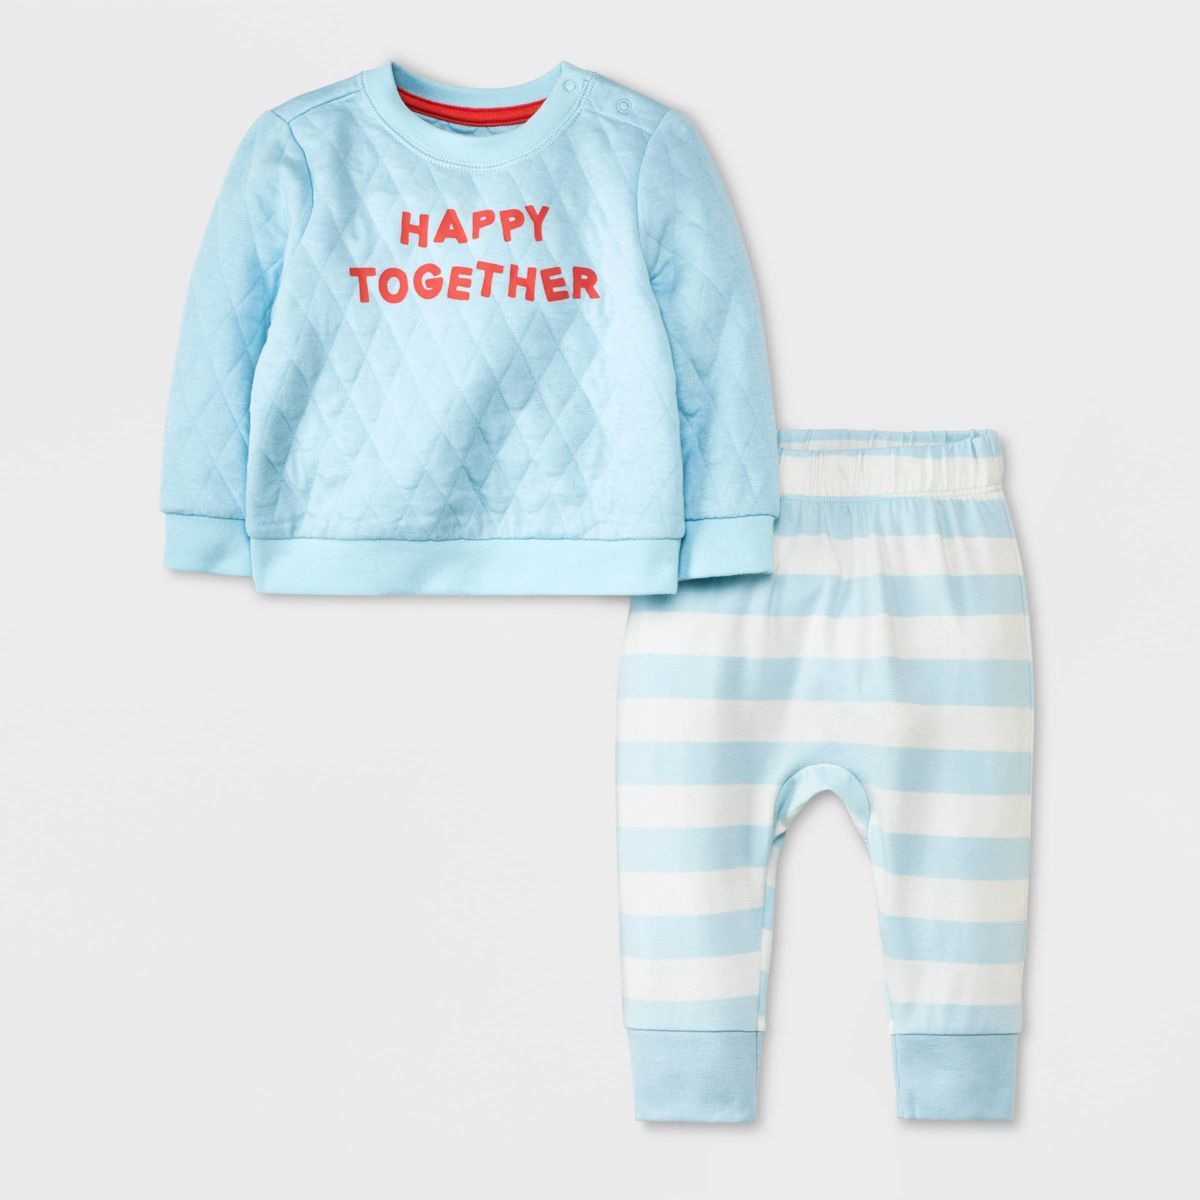 Baby 'Happy Together' Graphic Top & Bottom Set - Cat & Jack™ Blue | Target